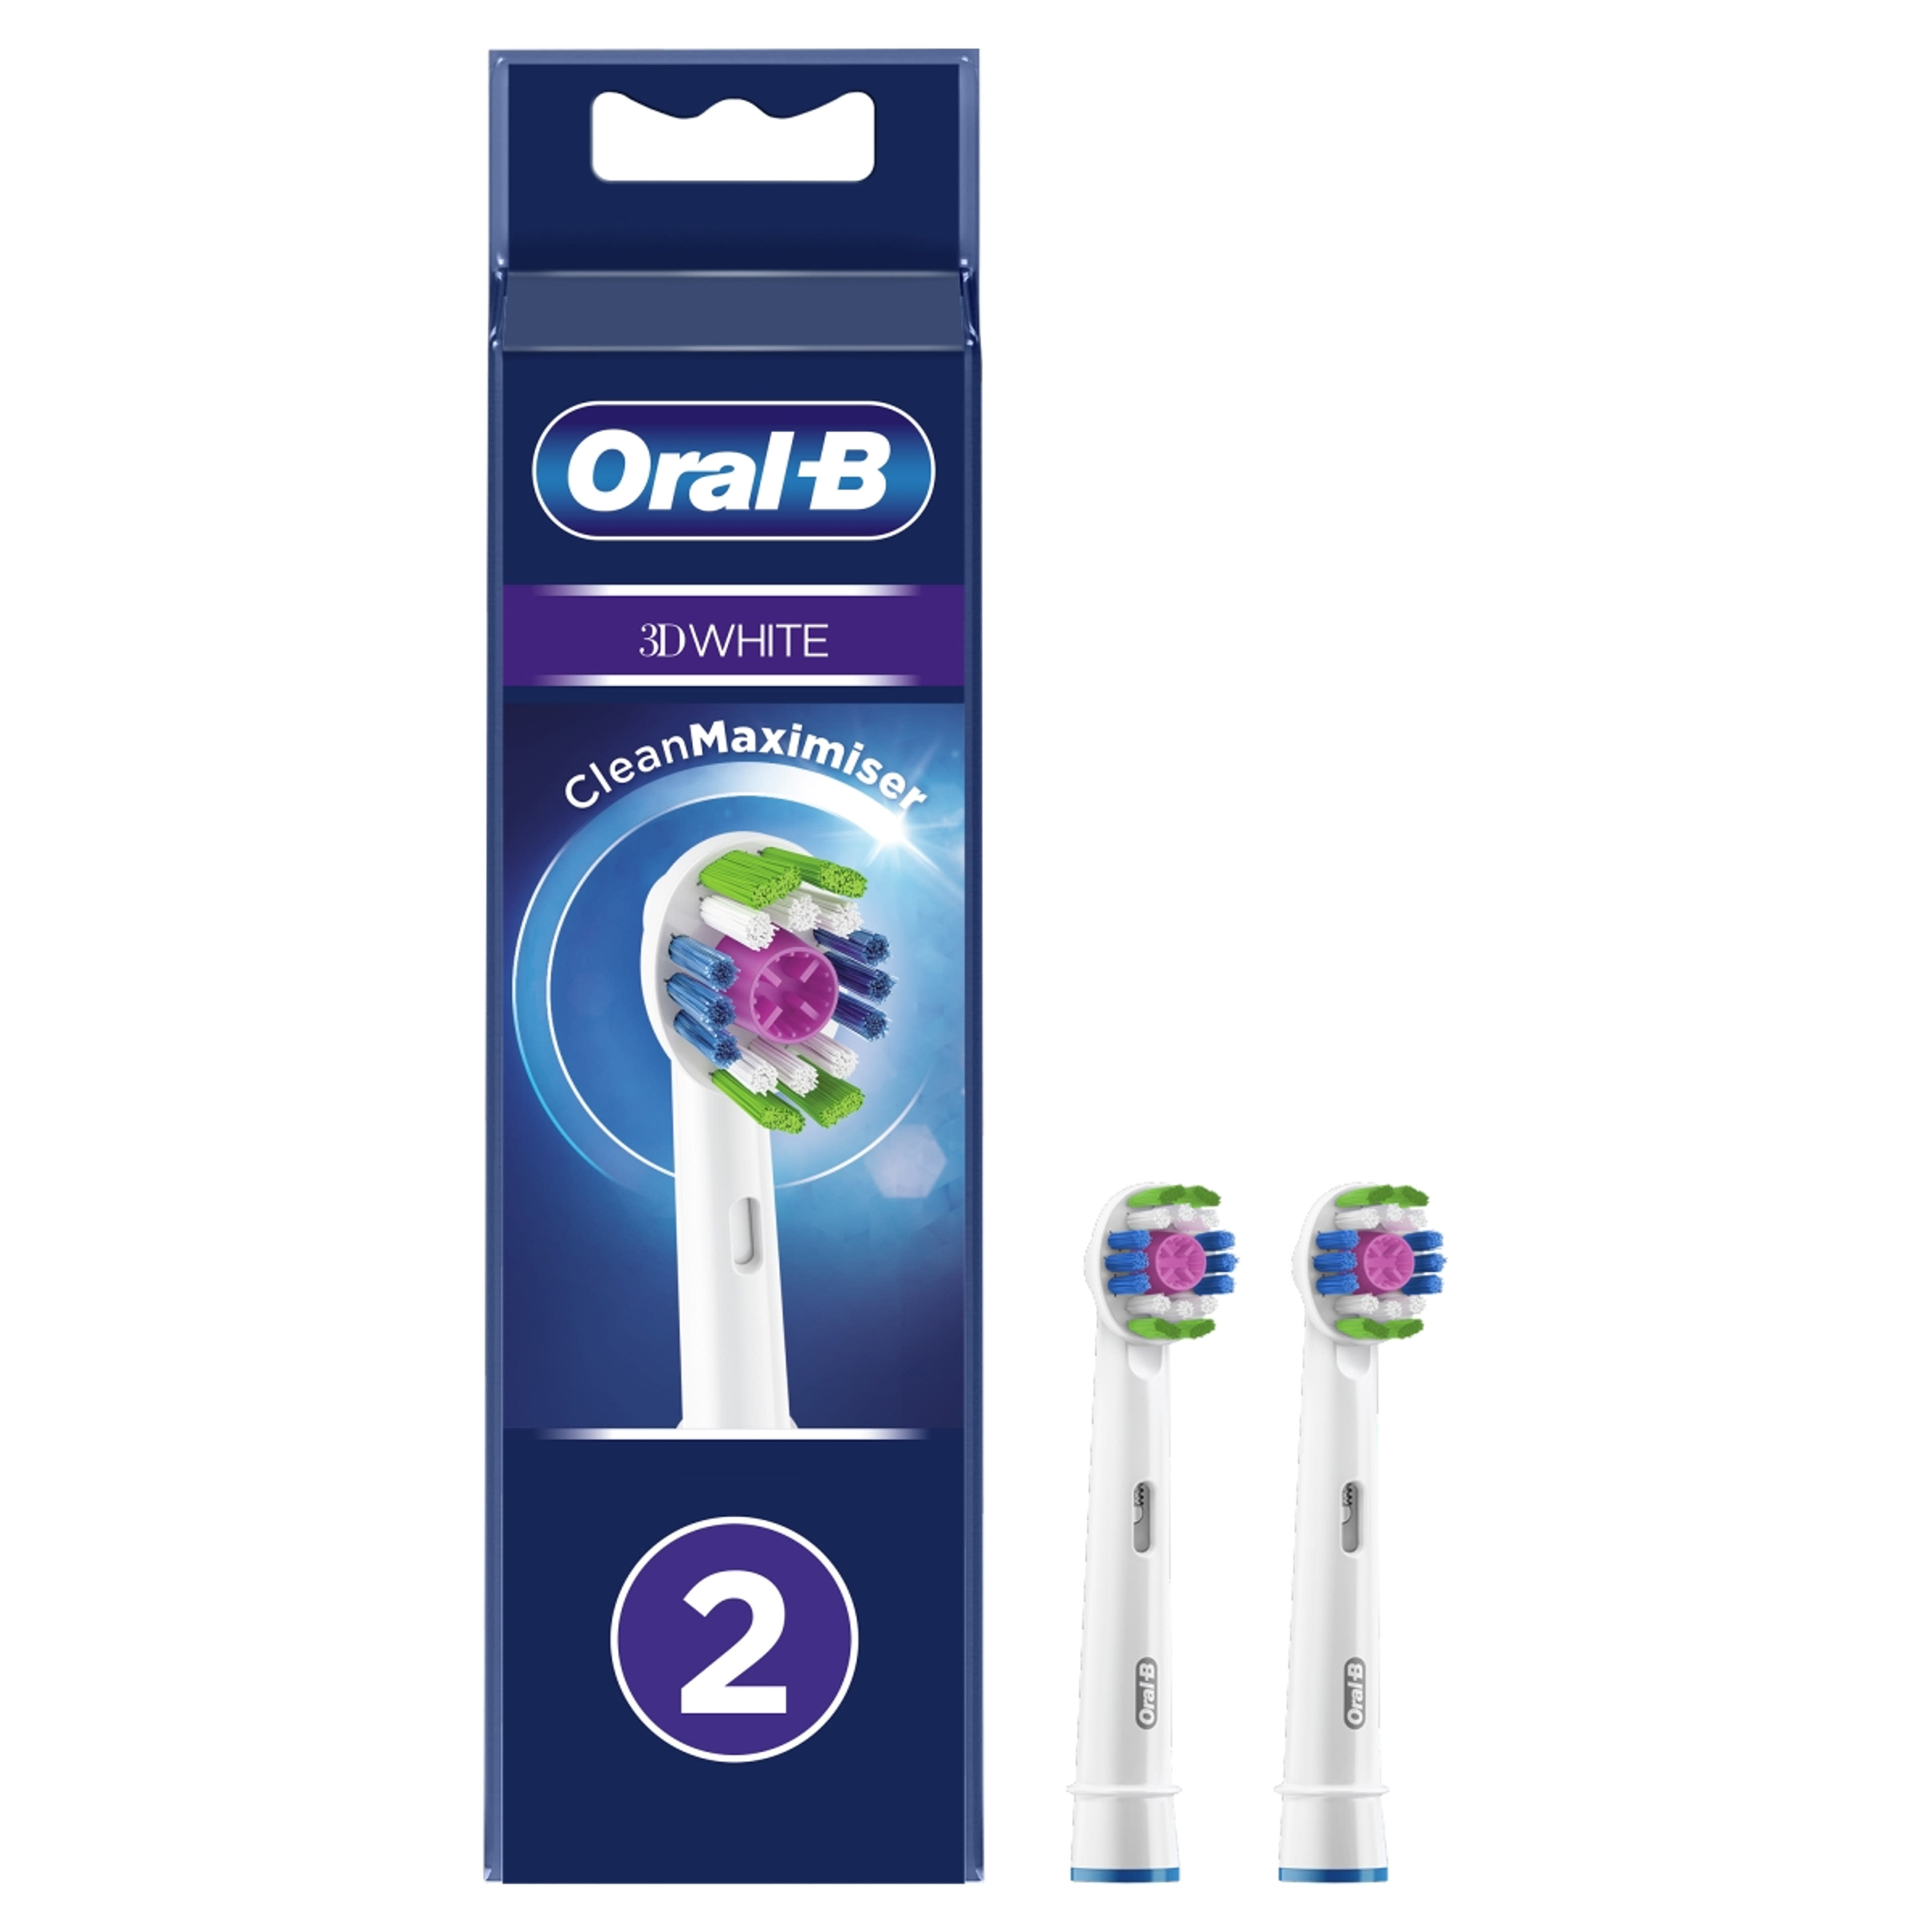 Oral-B 3D White elektromos fogkefe fótfej - 2 db-7